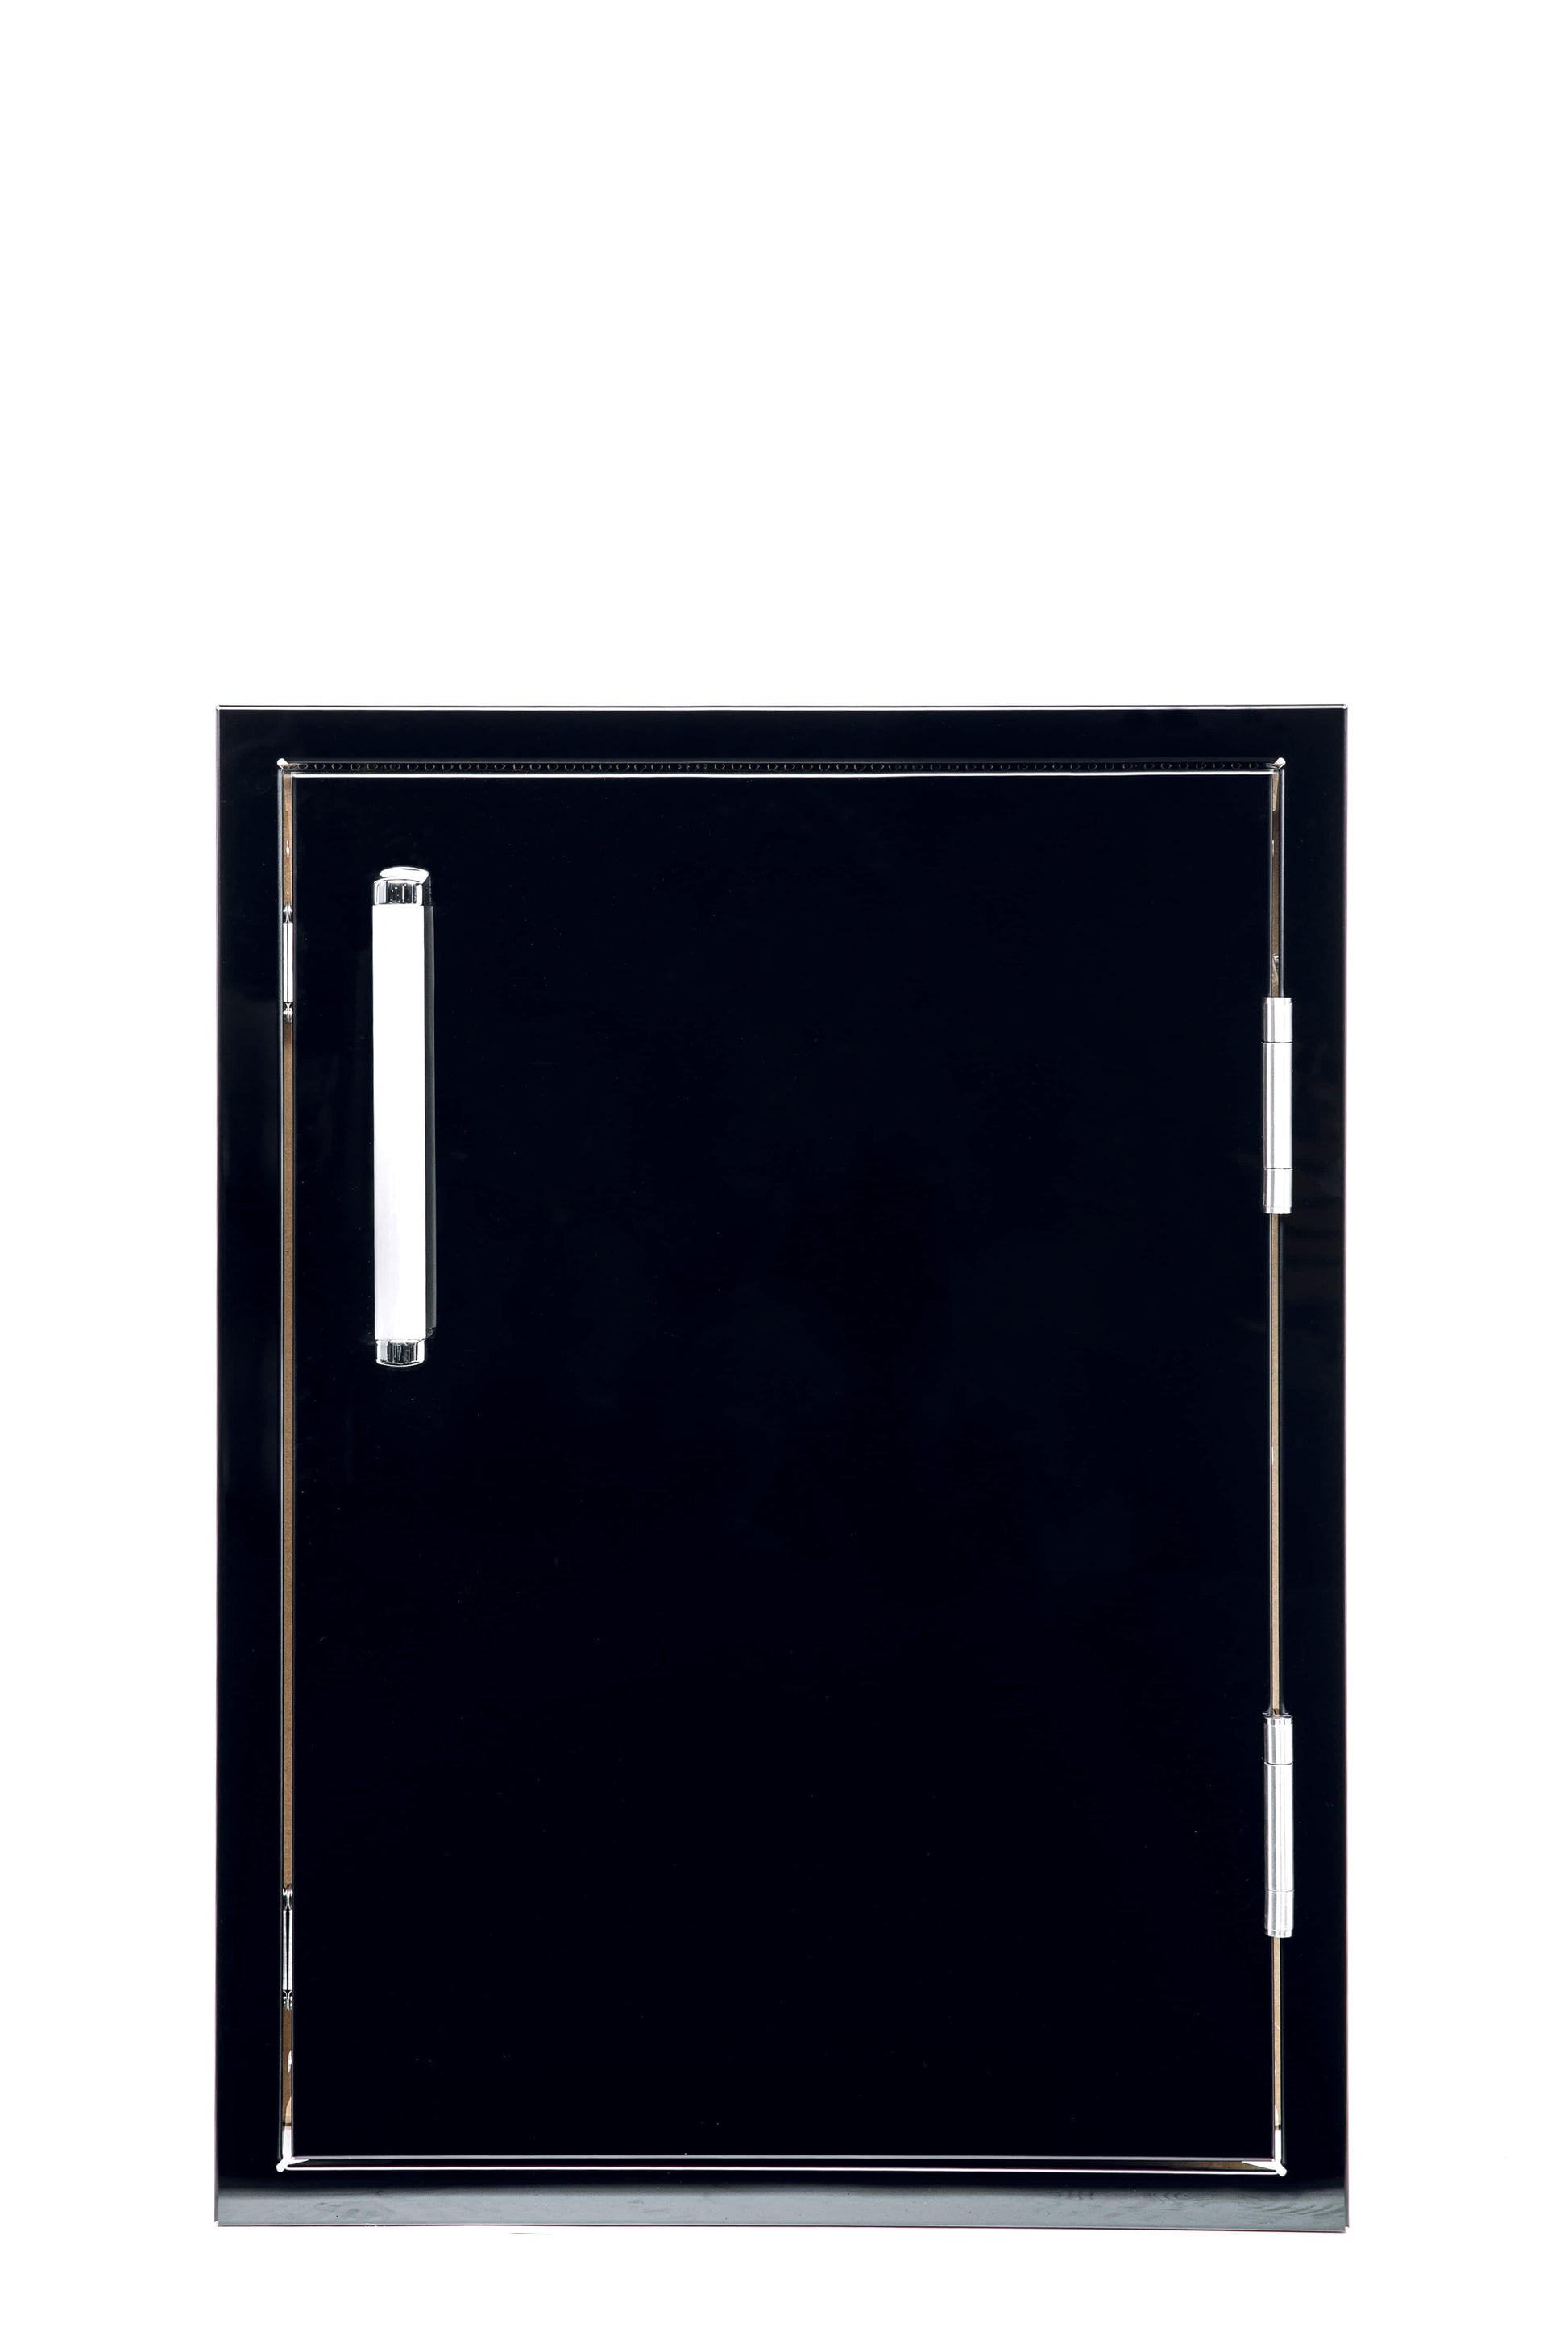 Bonfire-Black-tainless-Steel-Outdoor-Kitchen-Vertical-Storage-Access-door-Black-Series-CBASDV1420-B